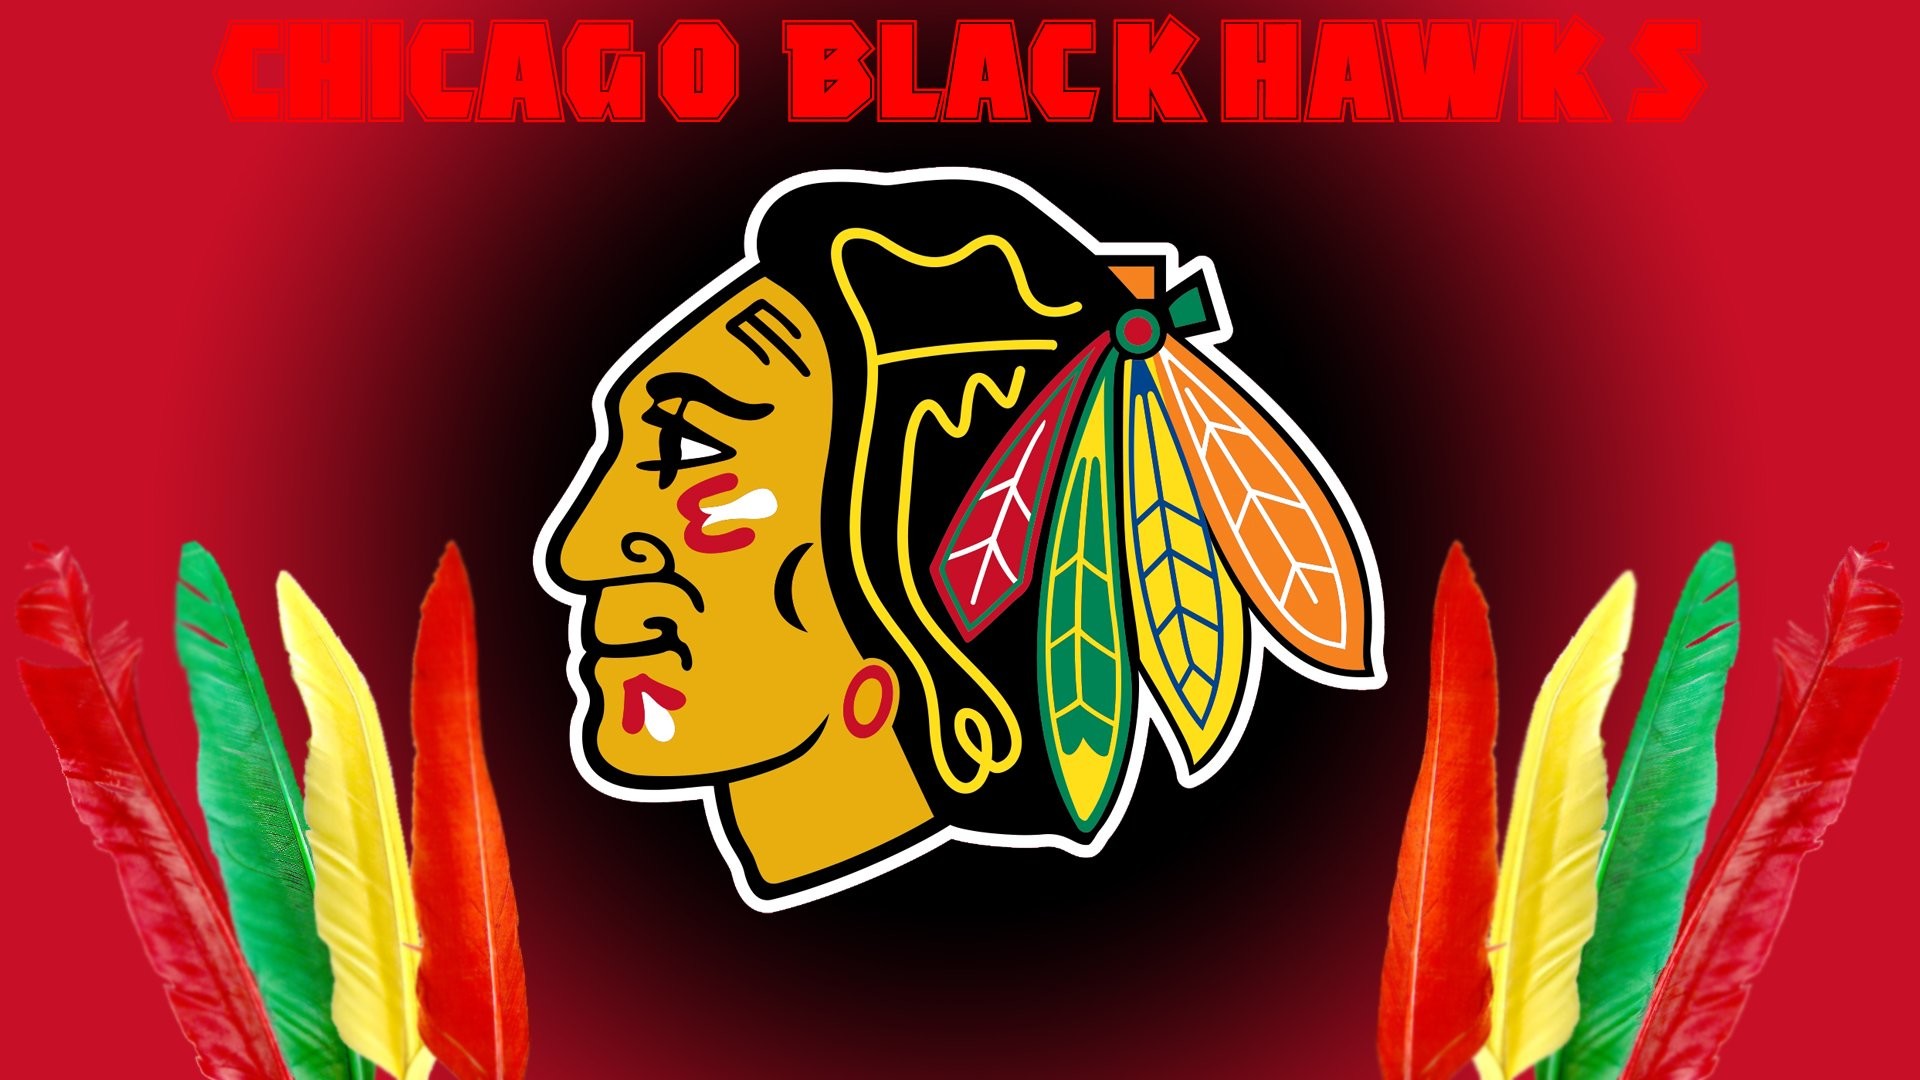 1920x1080 Download Chicago Blackhawks nhl hockey